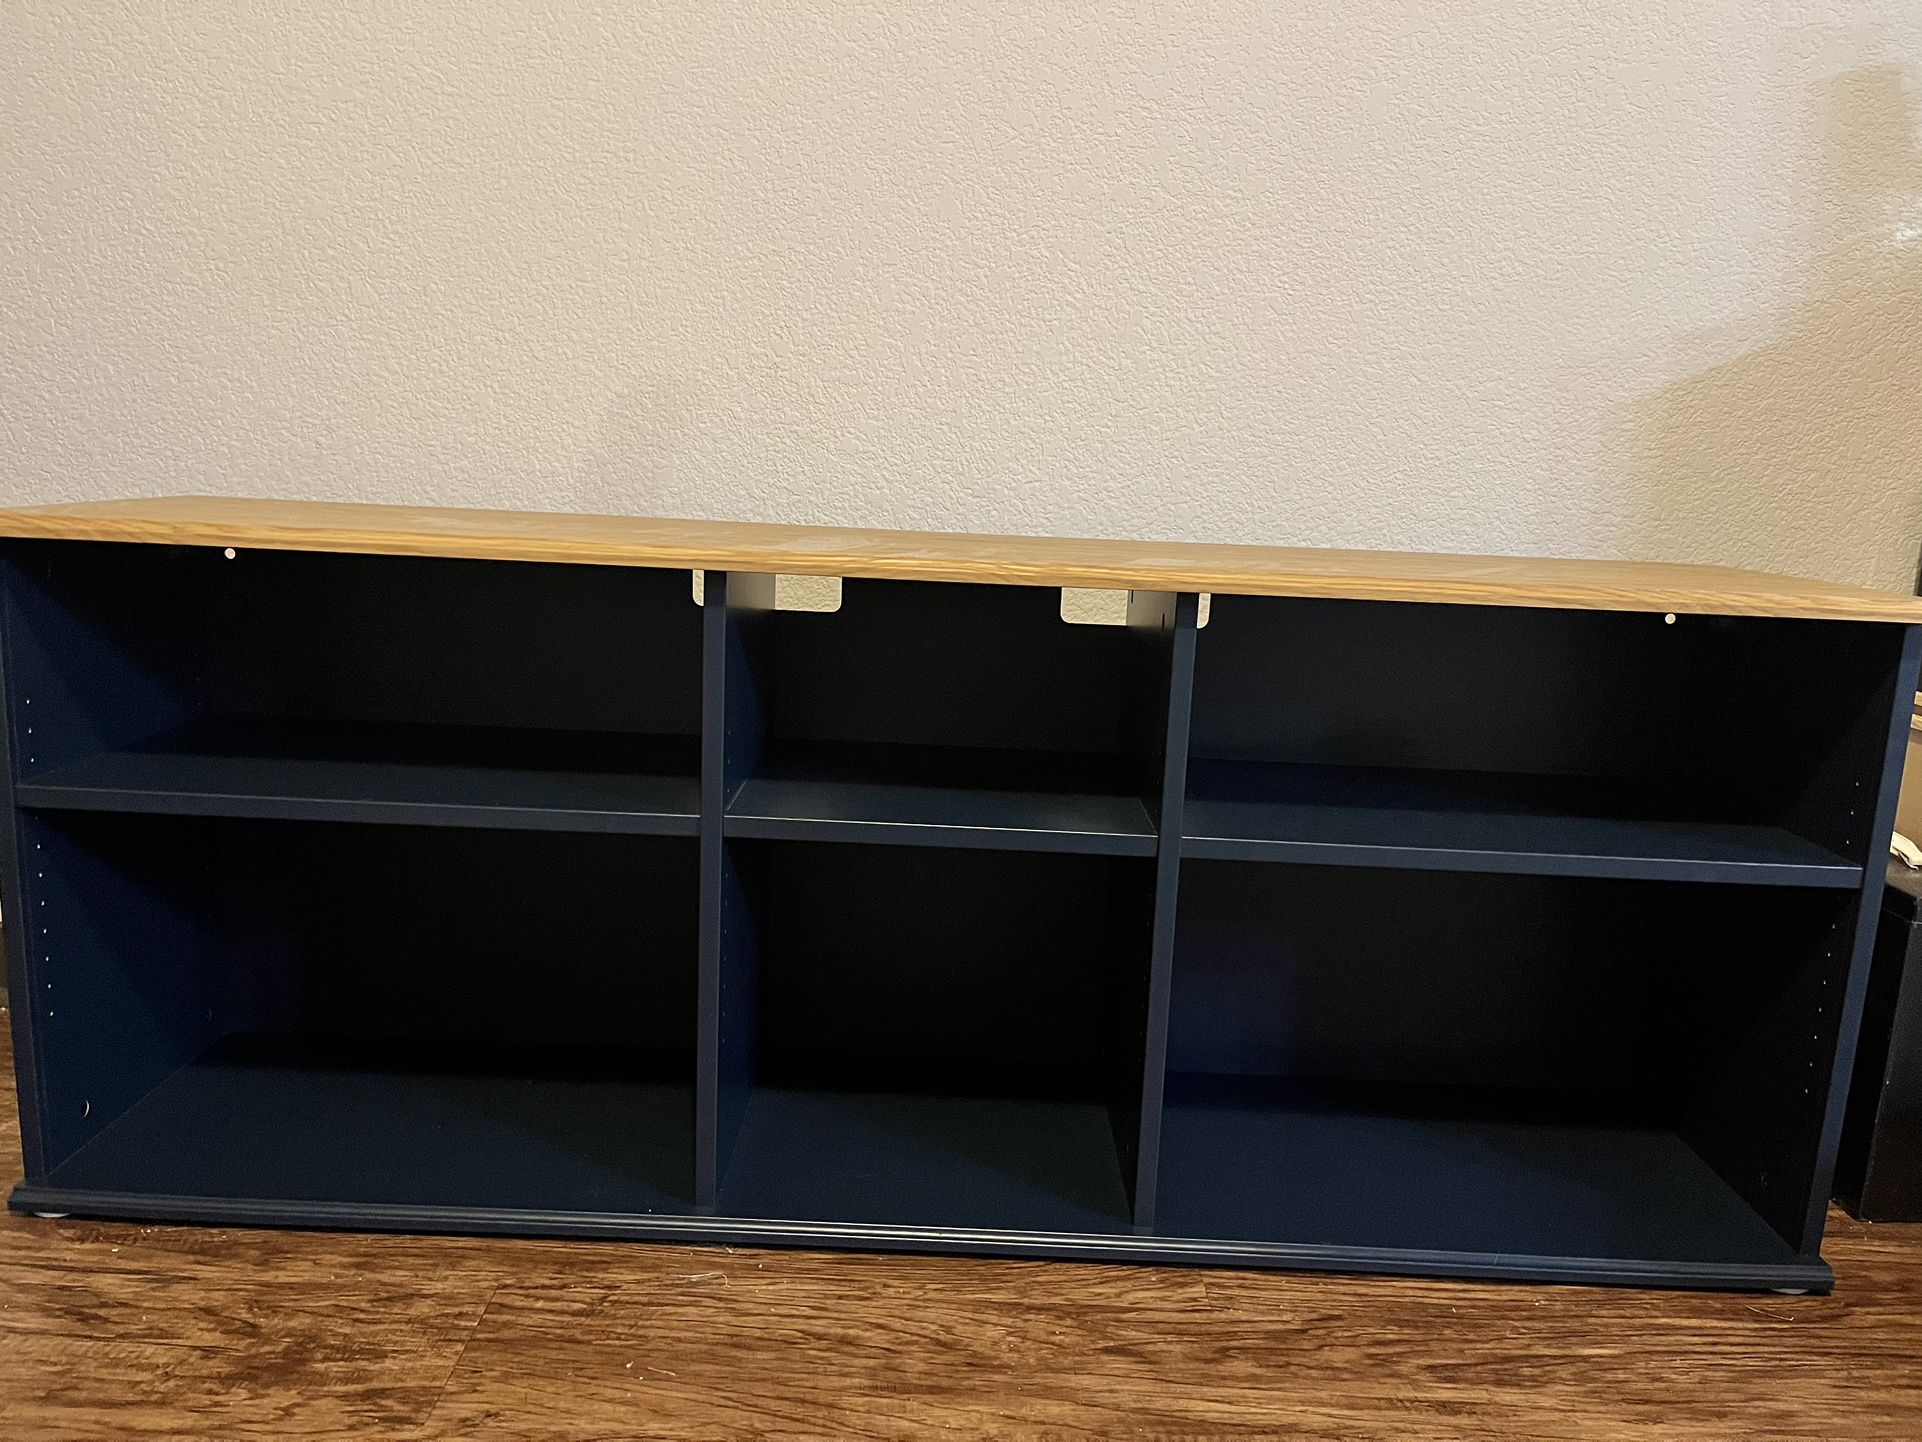 IKEA TV Stand - OBO